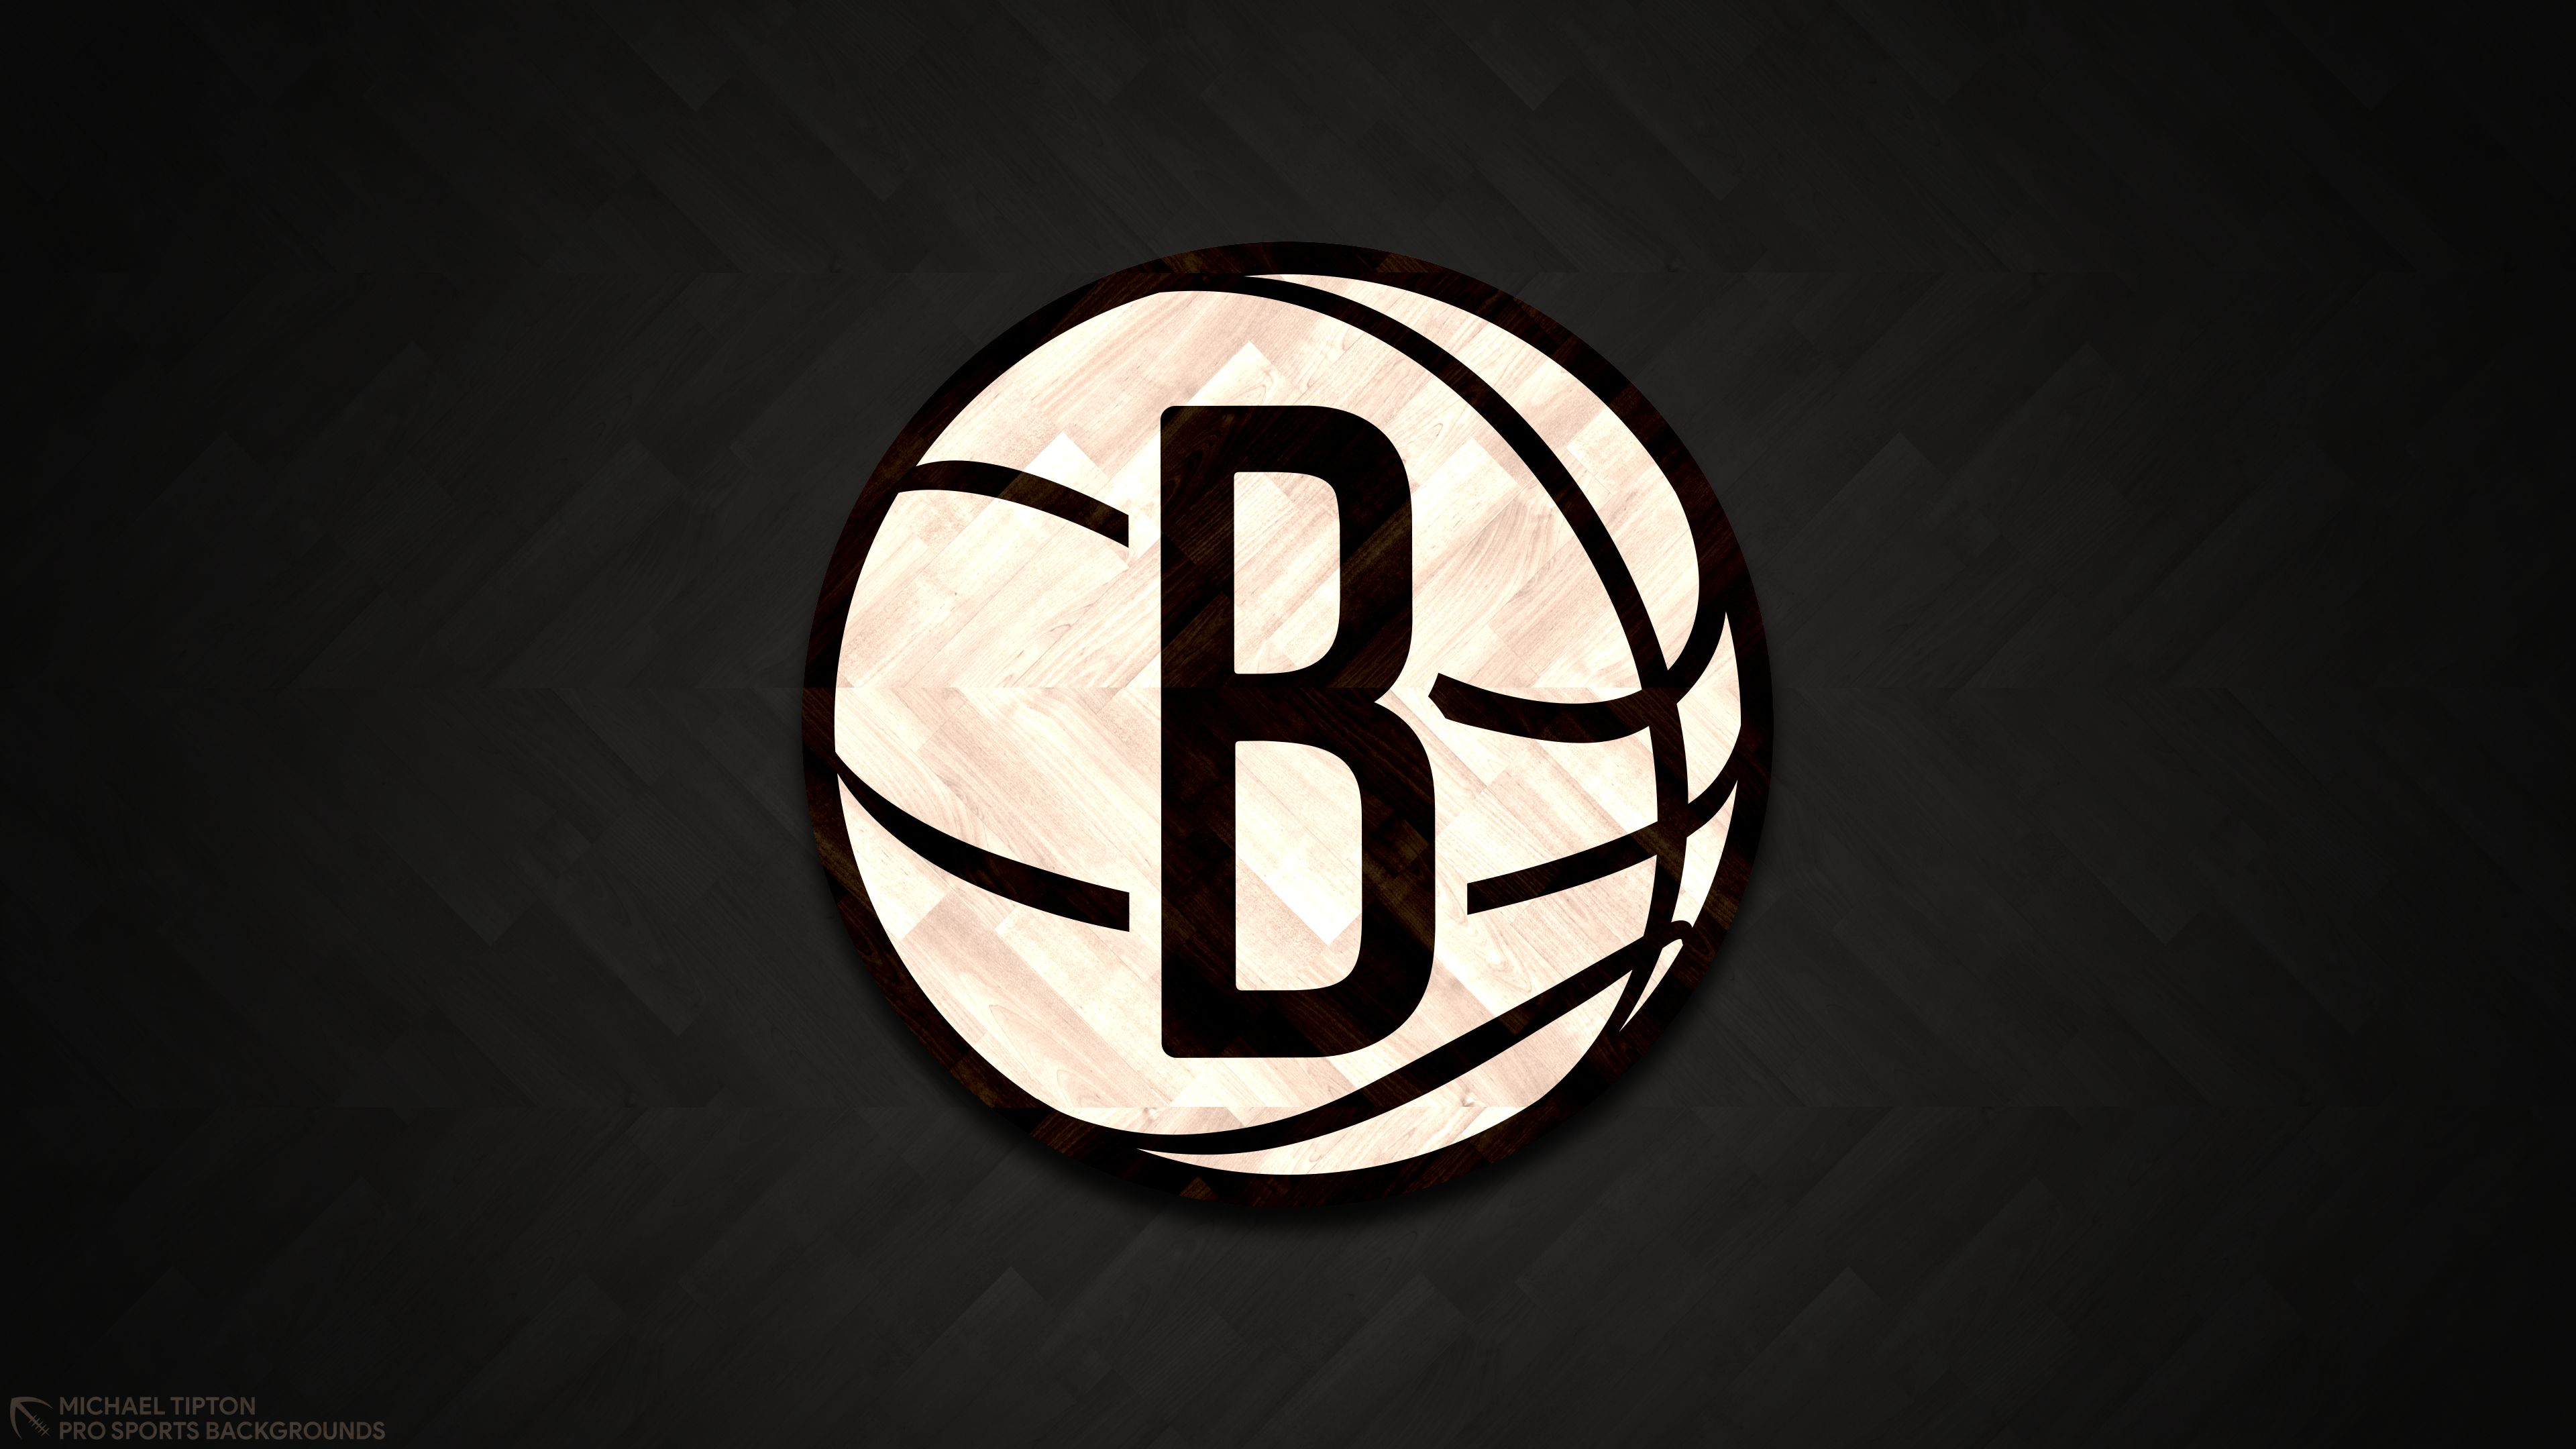 HD wallpaper Sports Brooklyn Nets Basketball Logo NBA  Wallpaper Flare